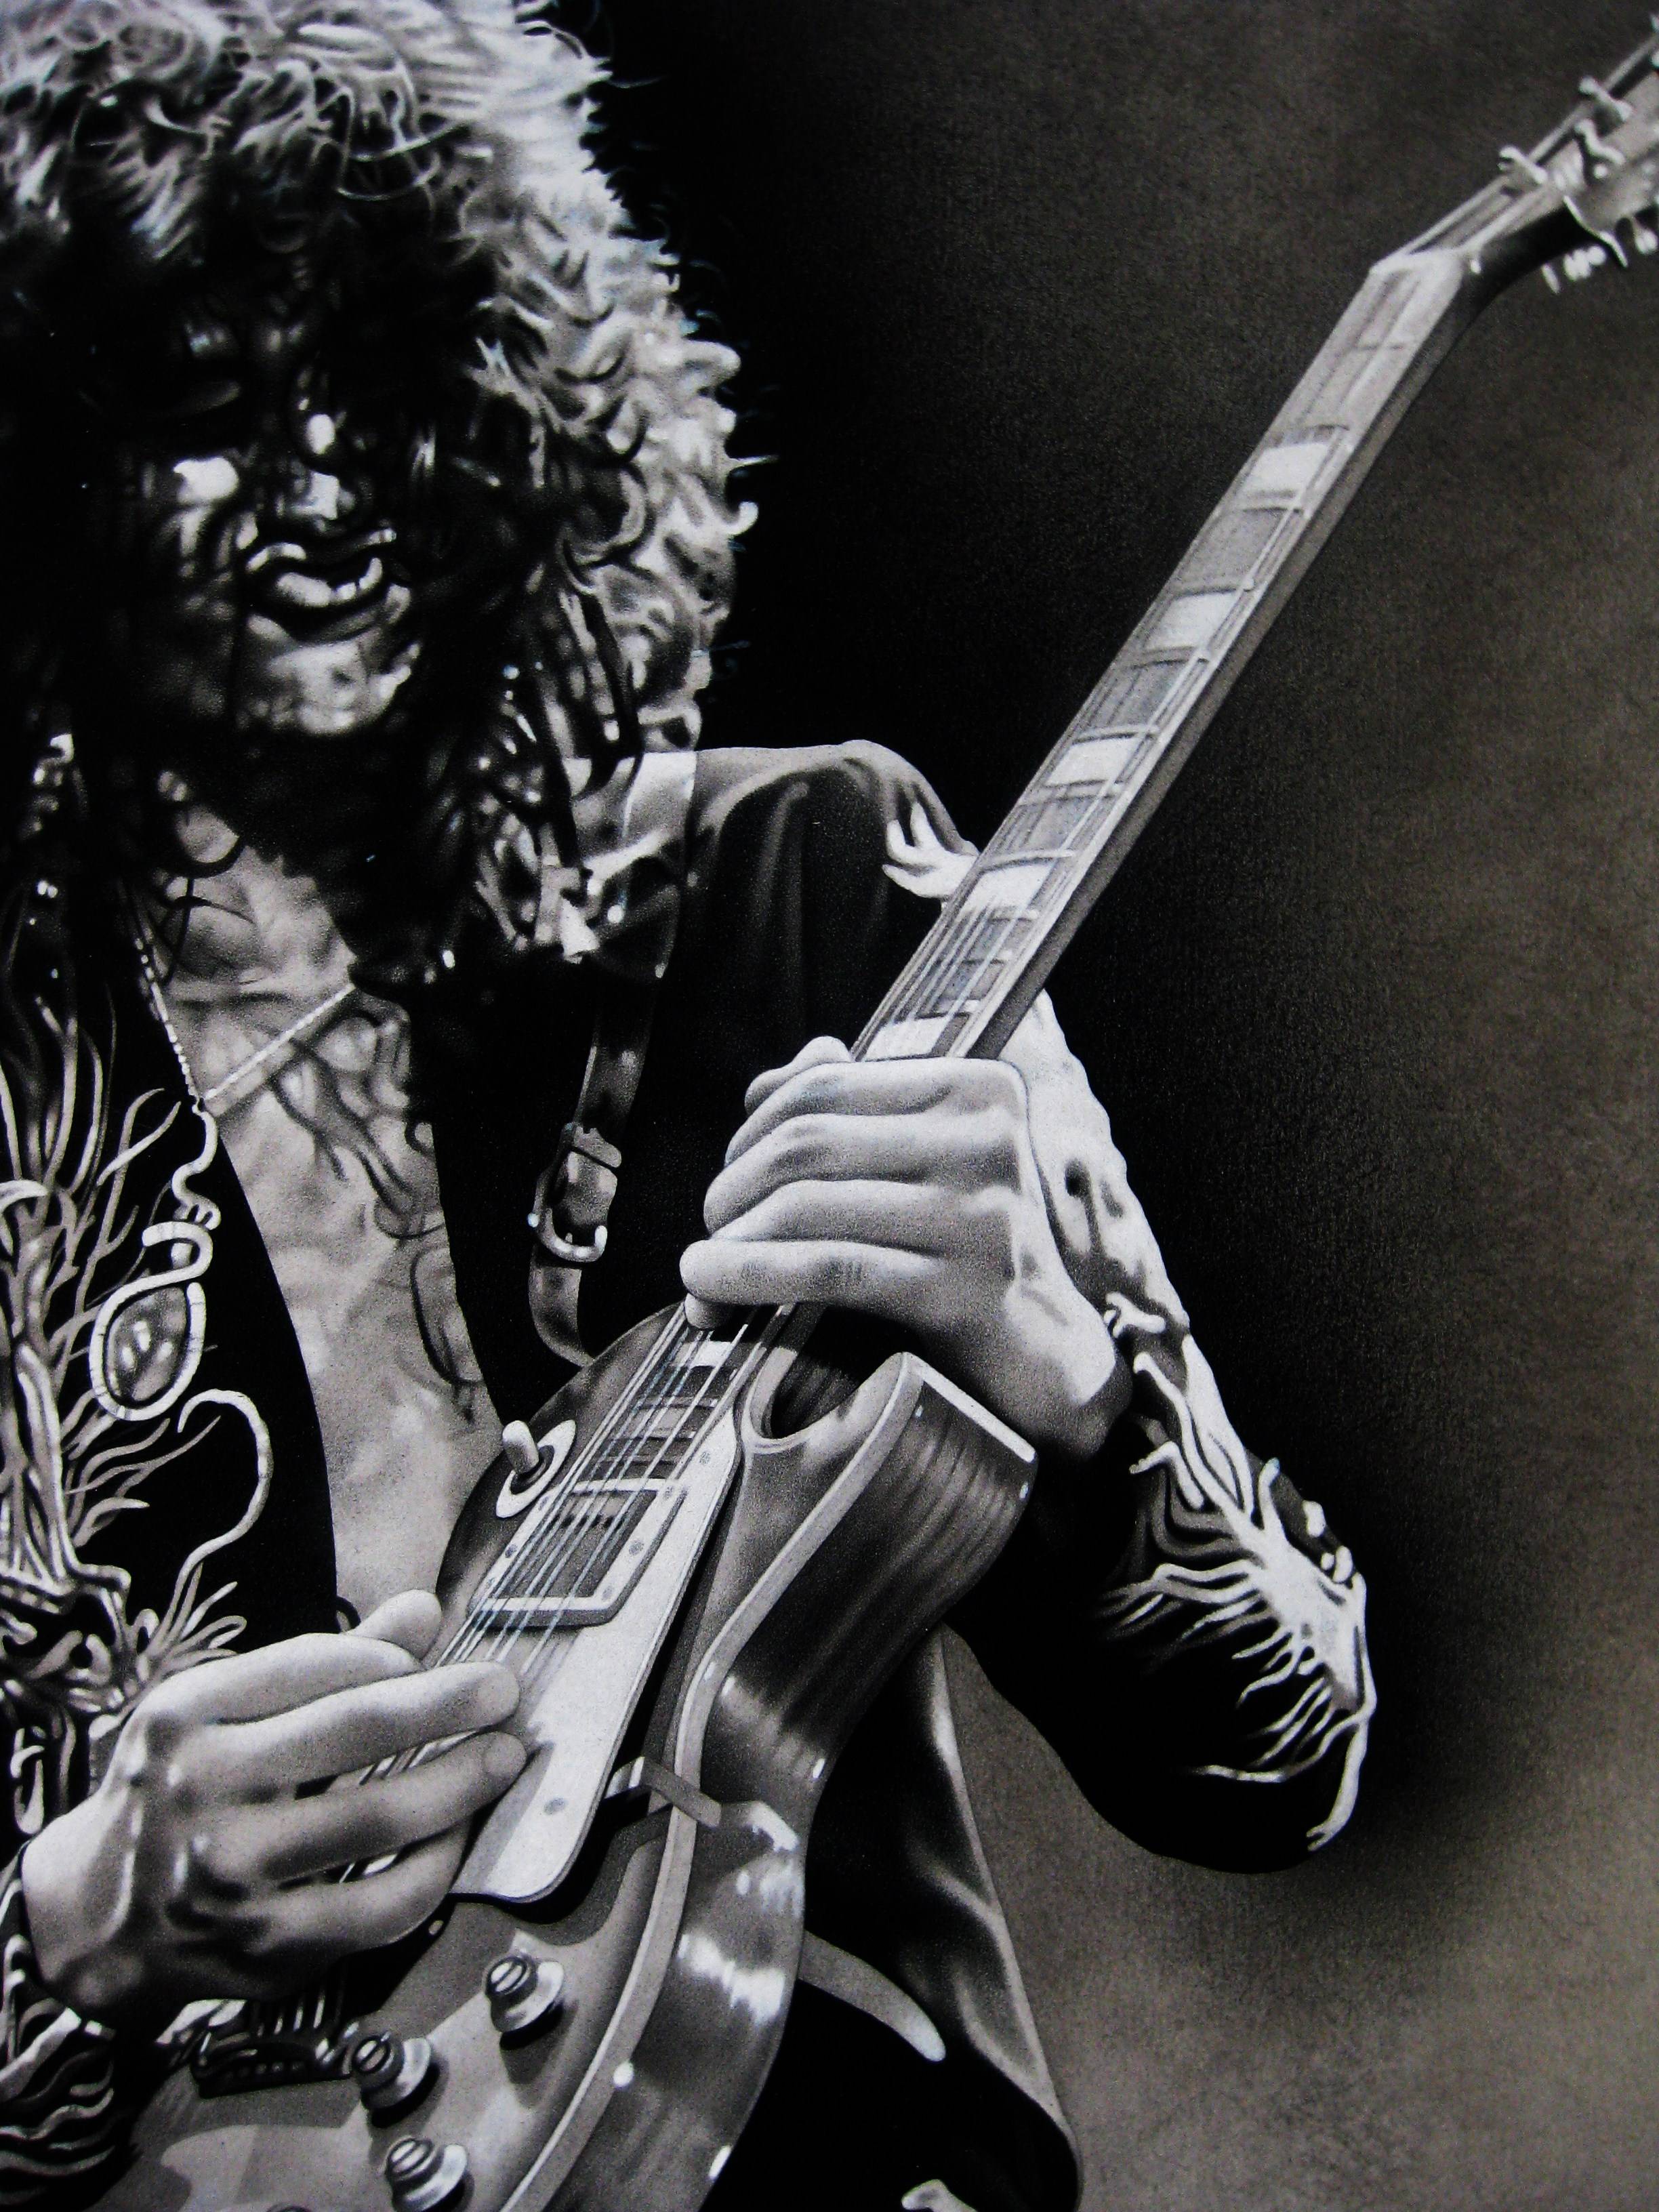 Hd Wallpapers Jimmy Page Led Zeppelin 2560 X 1600 1526 Kb Jpeg.